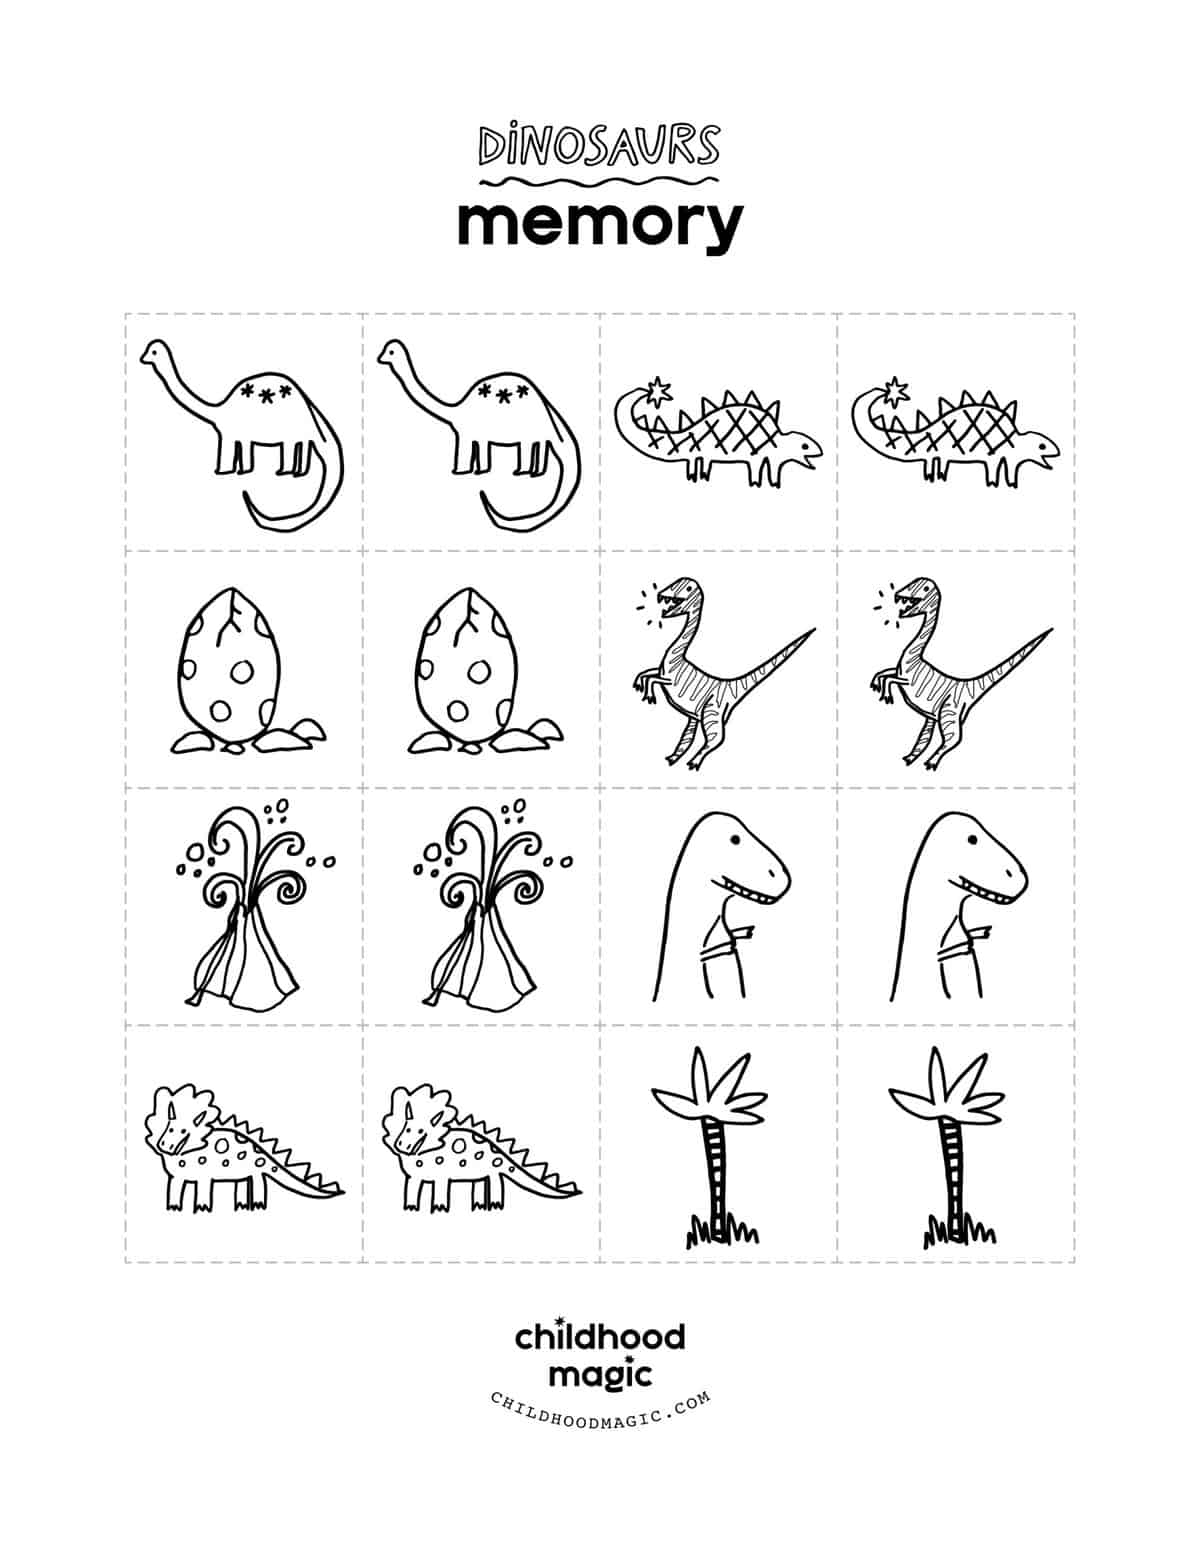 memory game printable